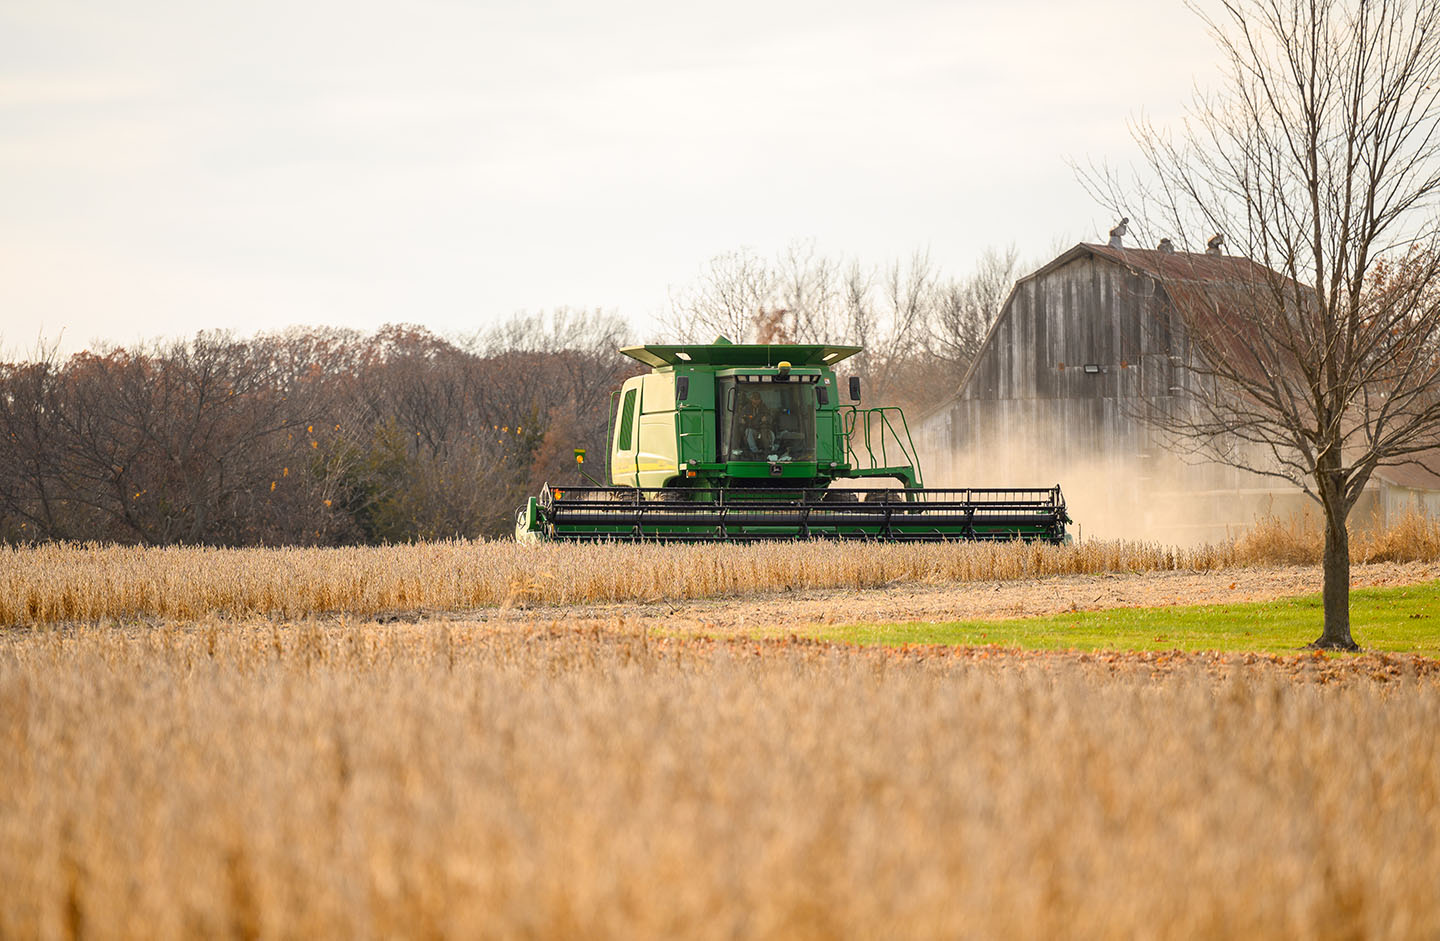 John Deere combine in soybean field during harvest